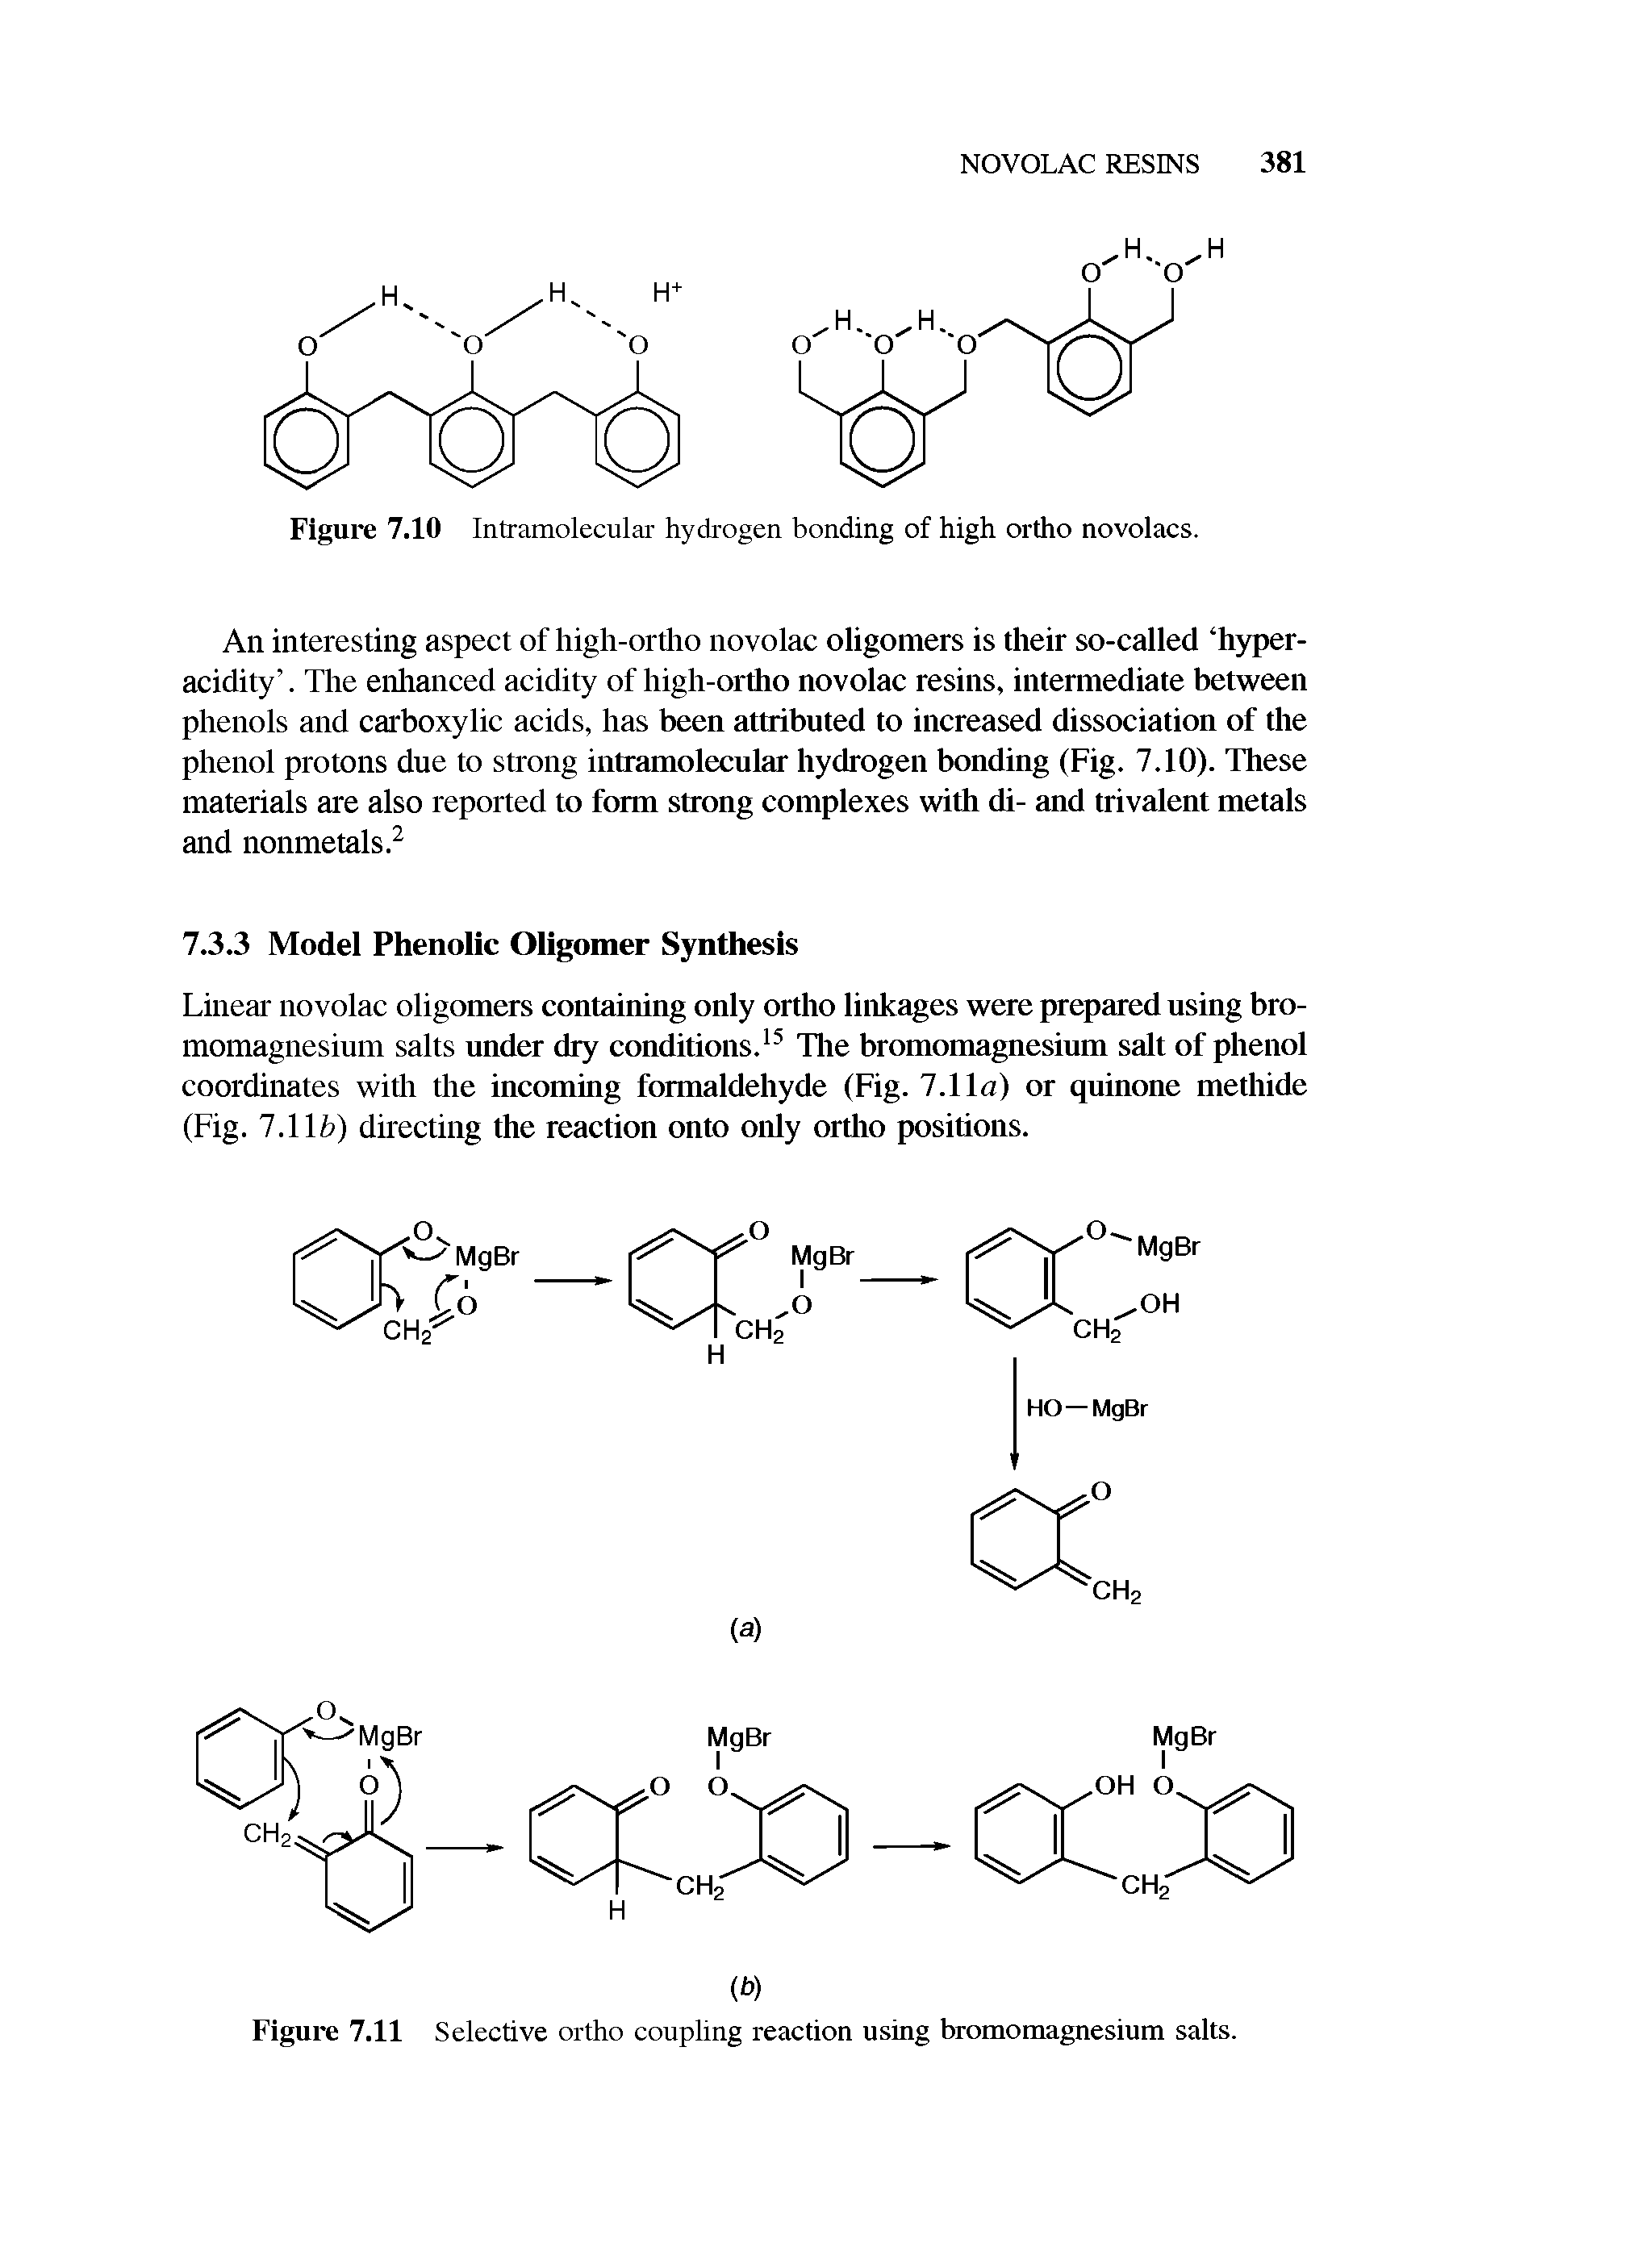 Figure 7.11 Selective ortho coupling reaction using bromomagnesium salts.